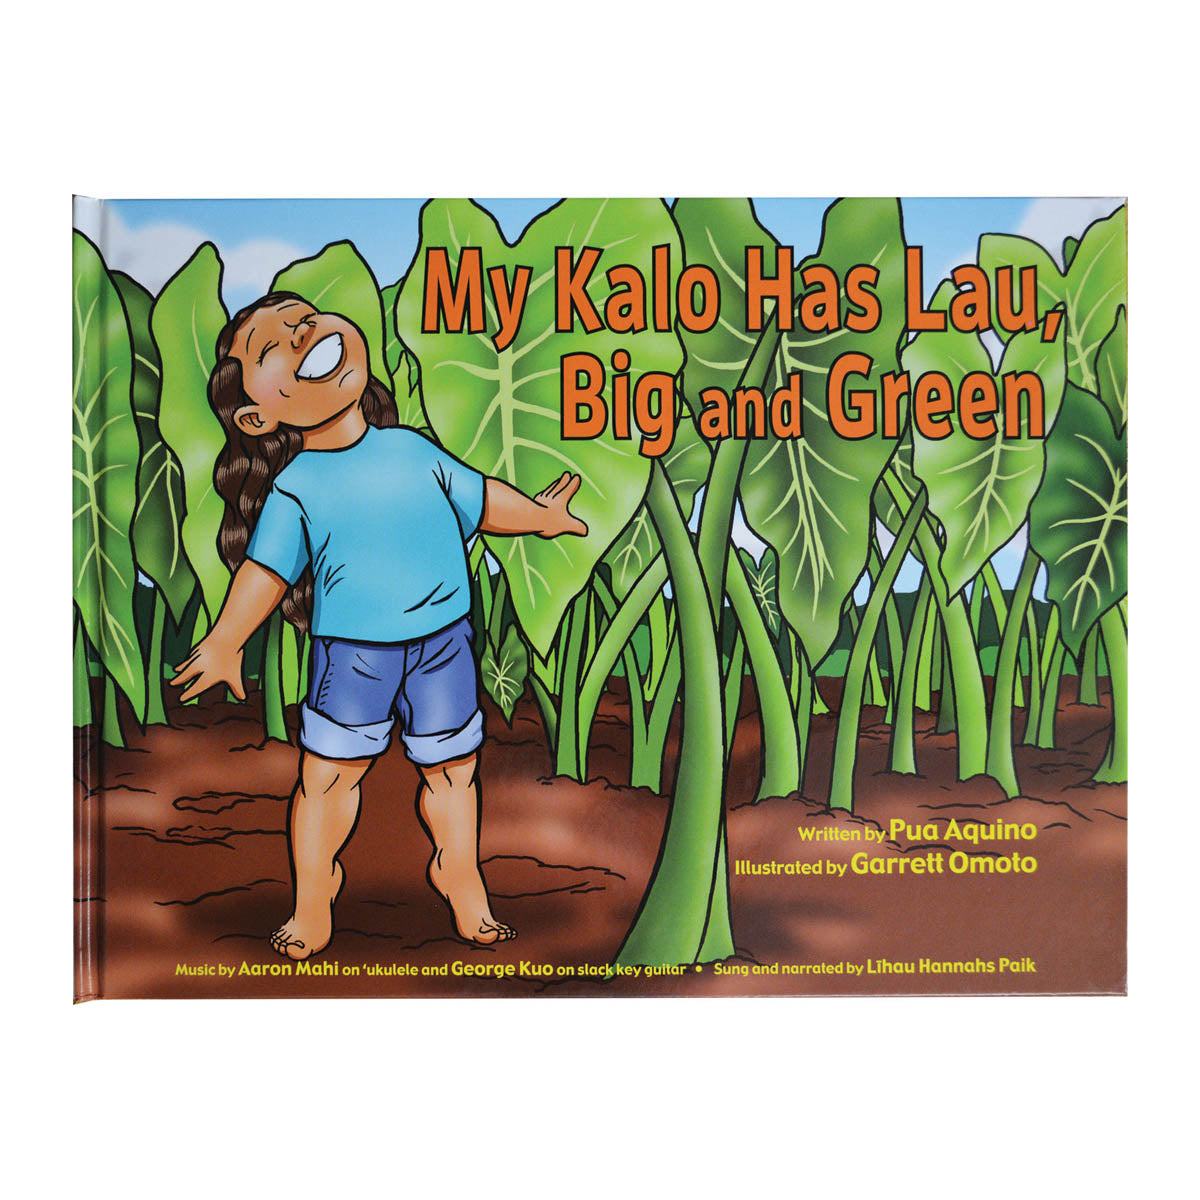 My Kalo Has Lau: Big and Green